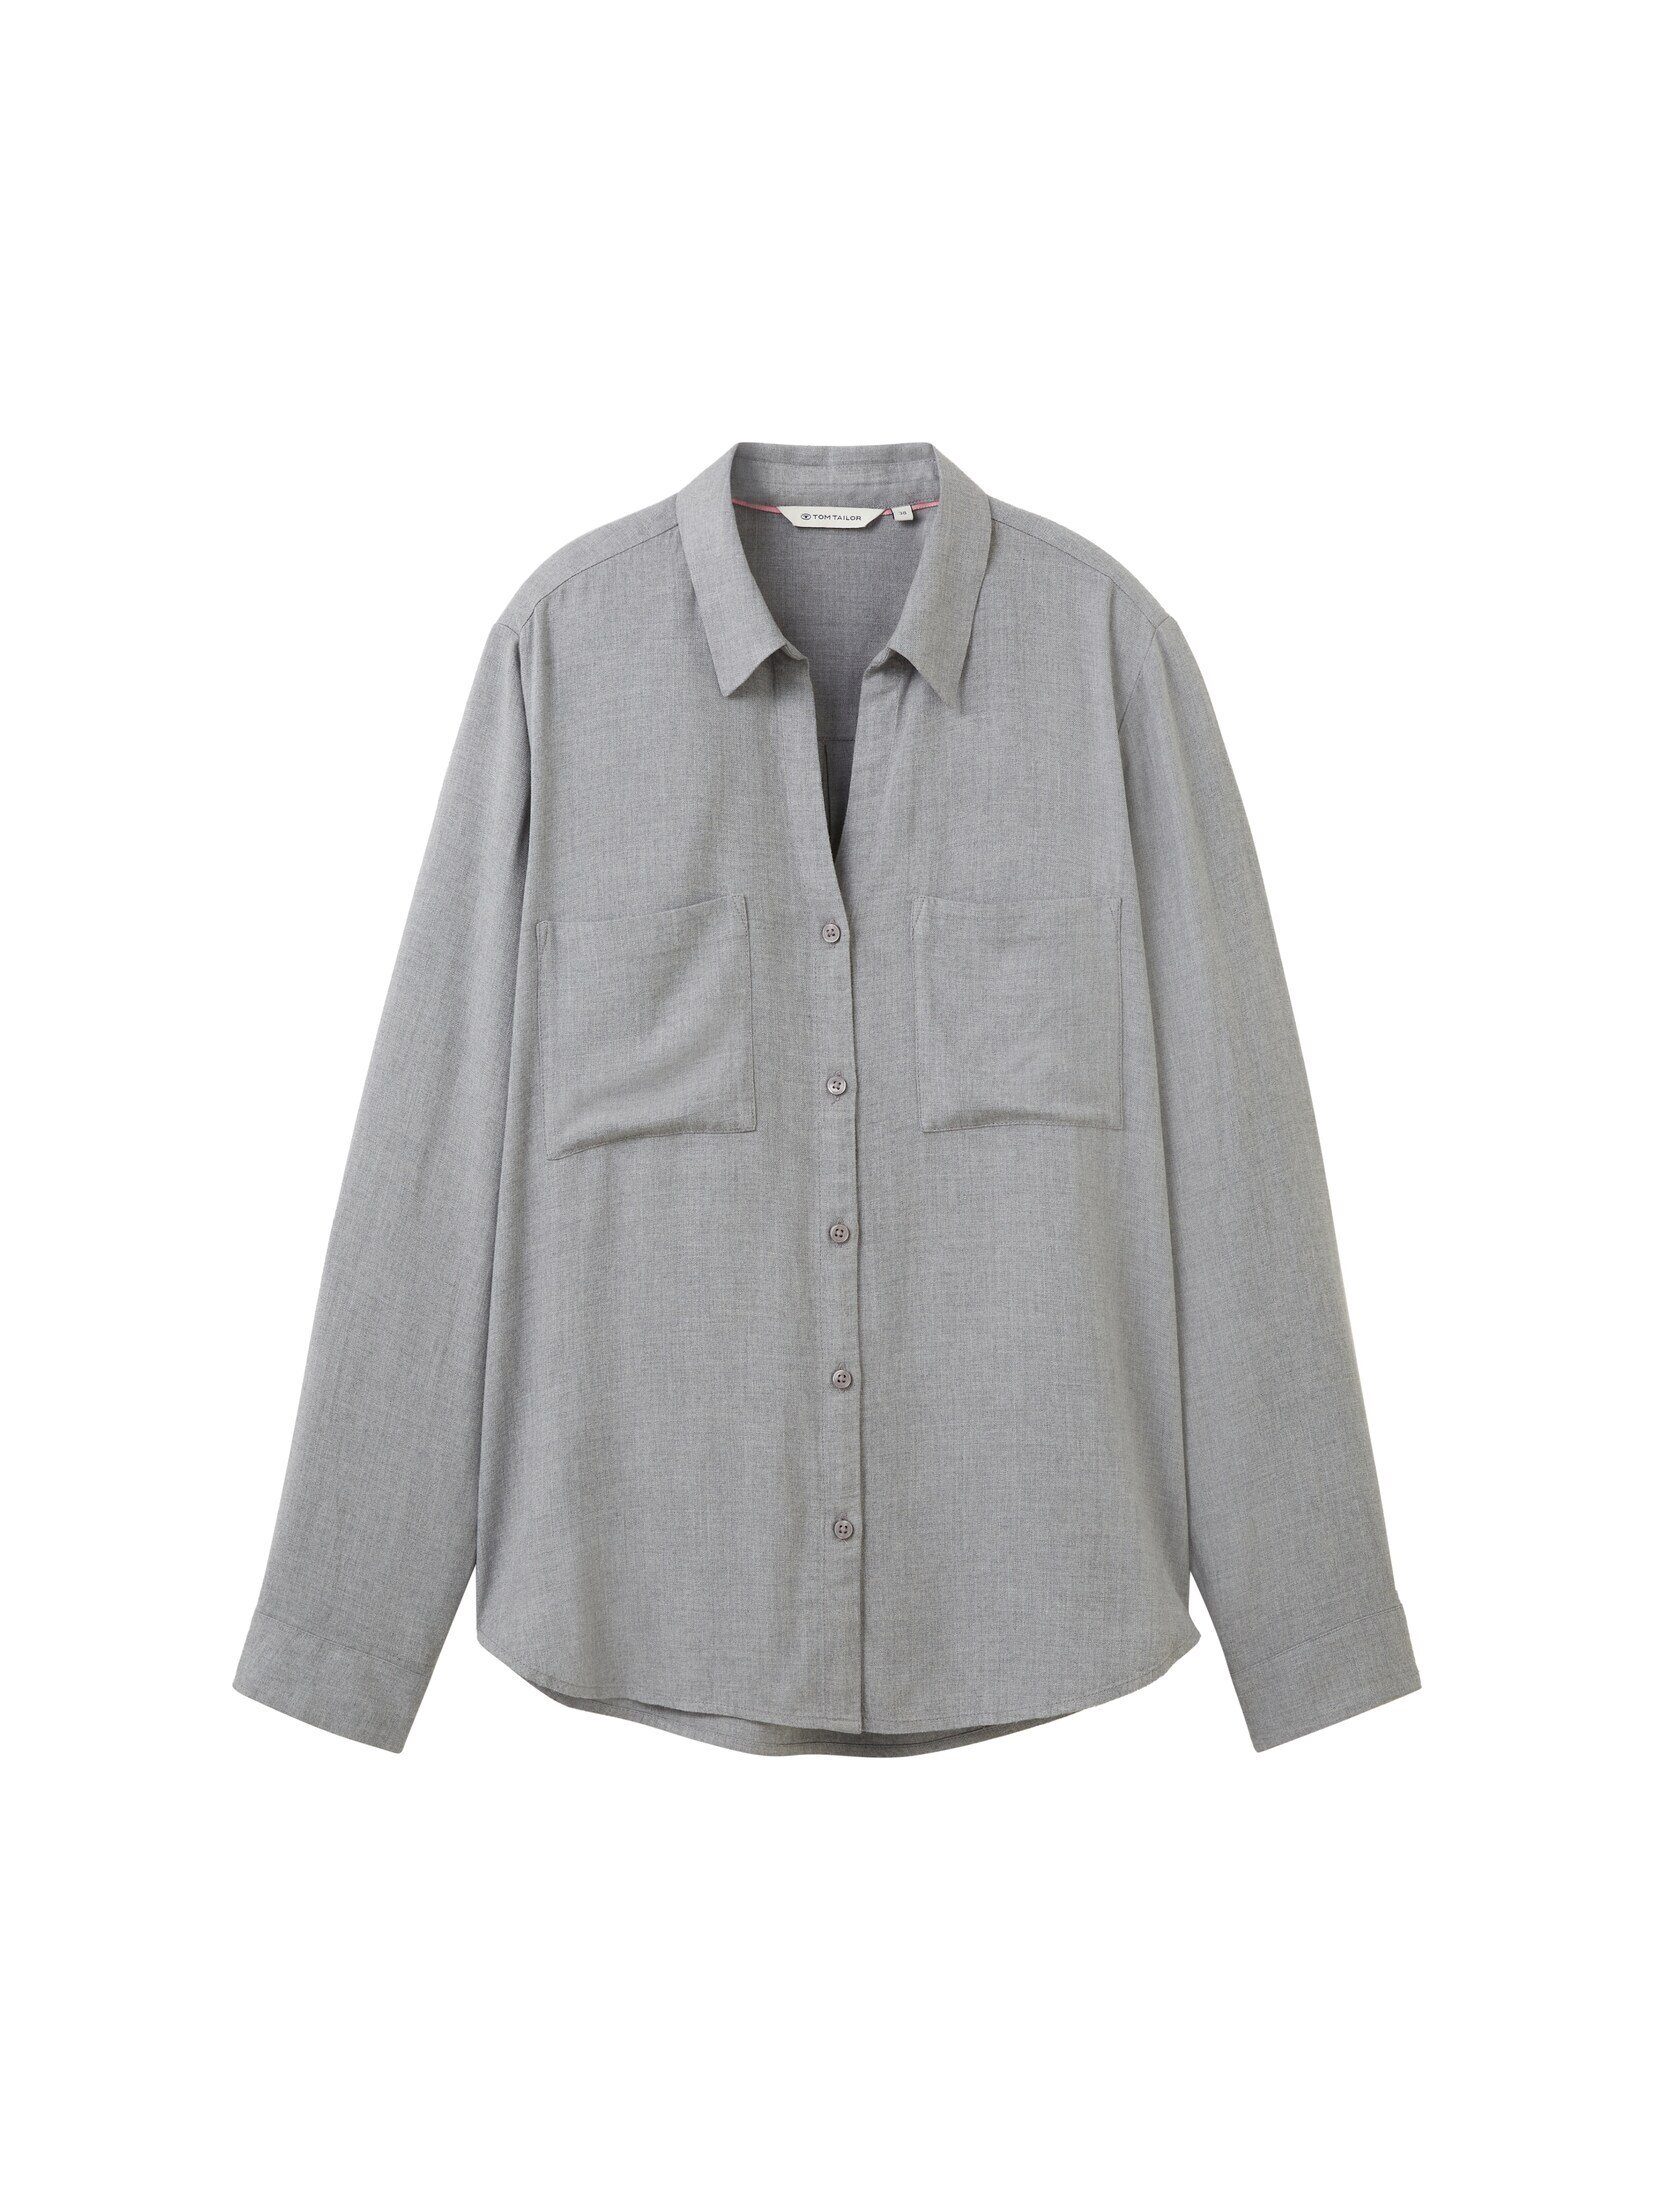 medium TAILOR Langarmbluse grey Bluse in melange TOM silver Optik Melange